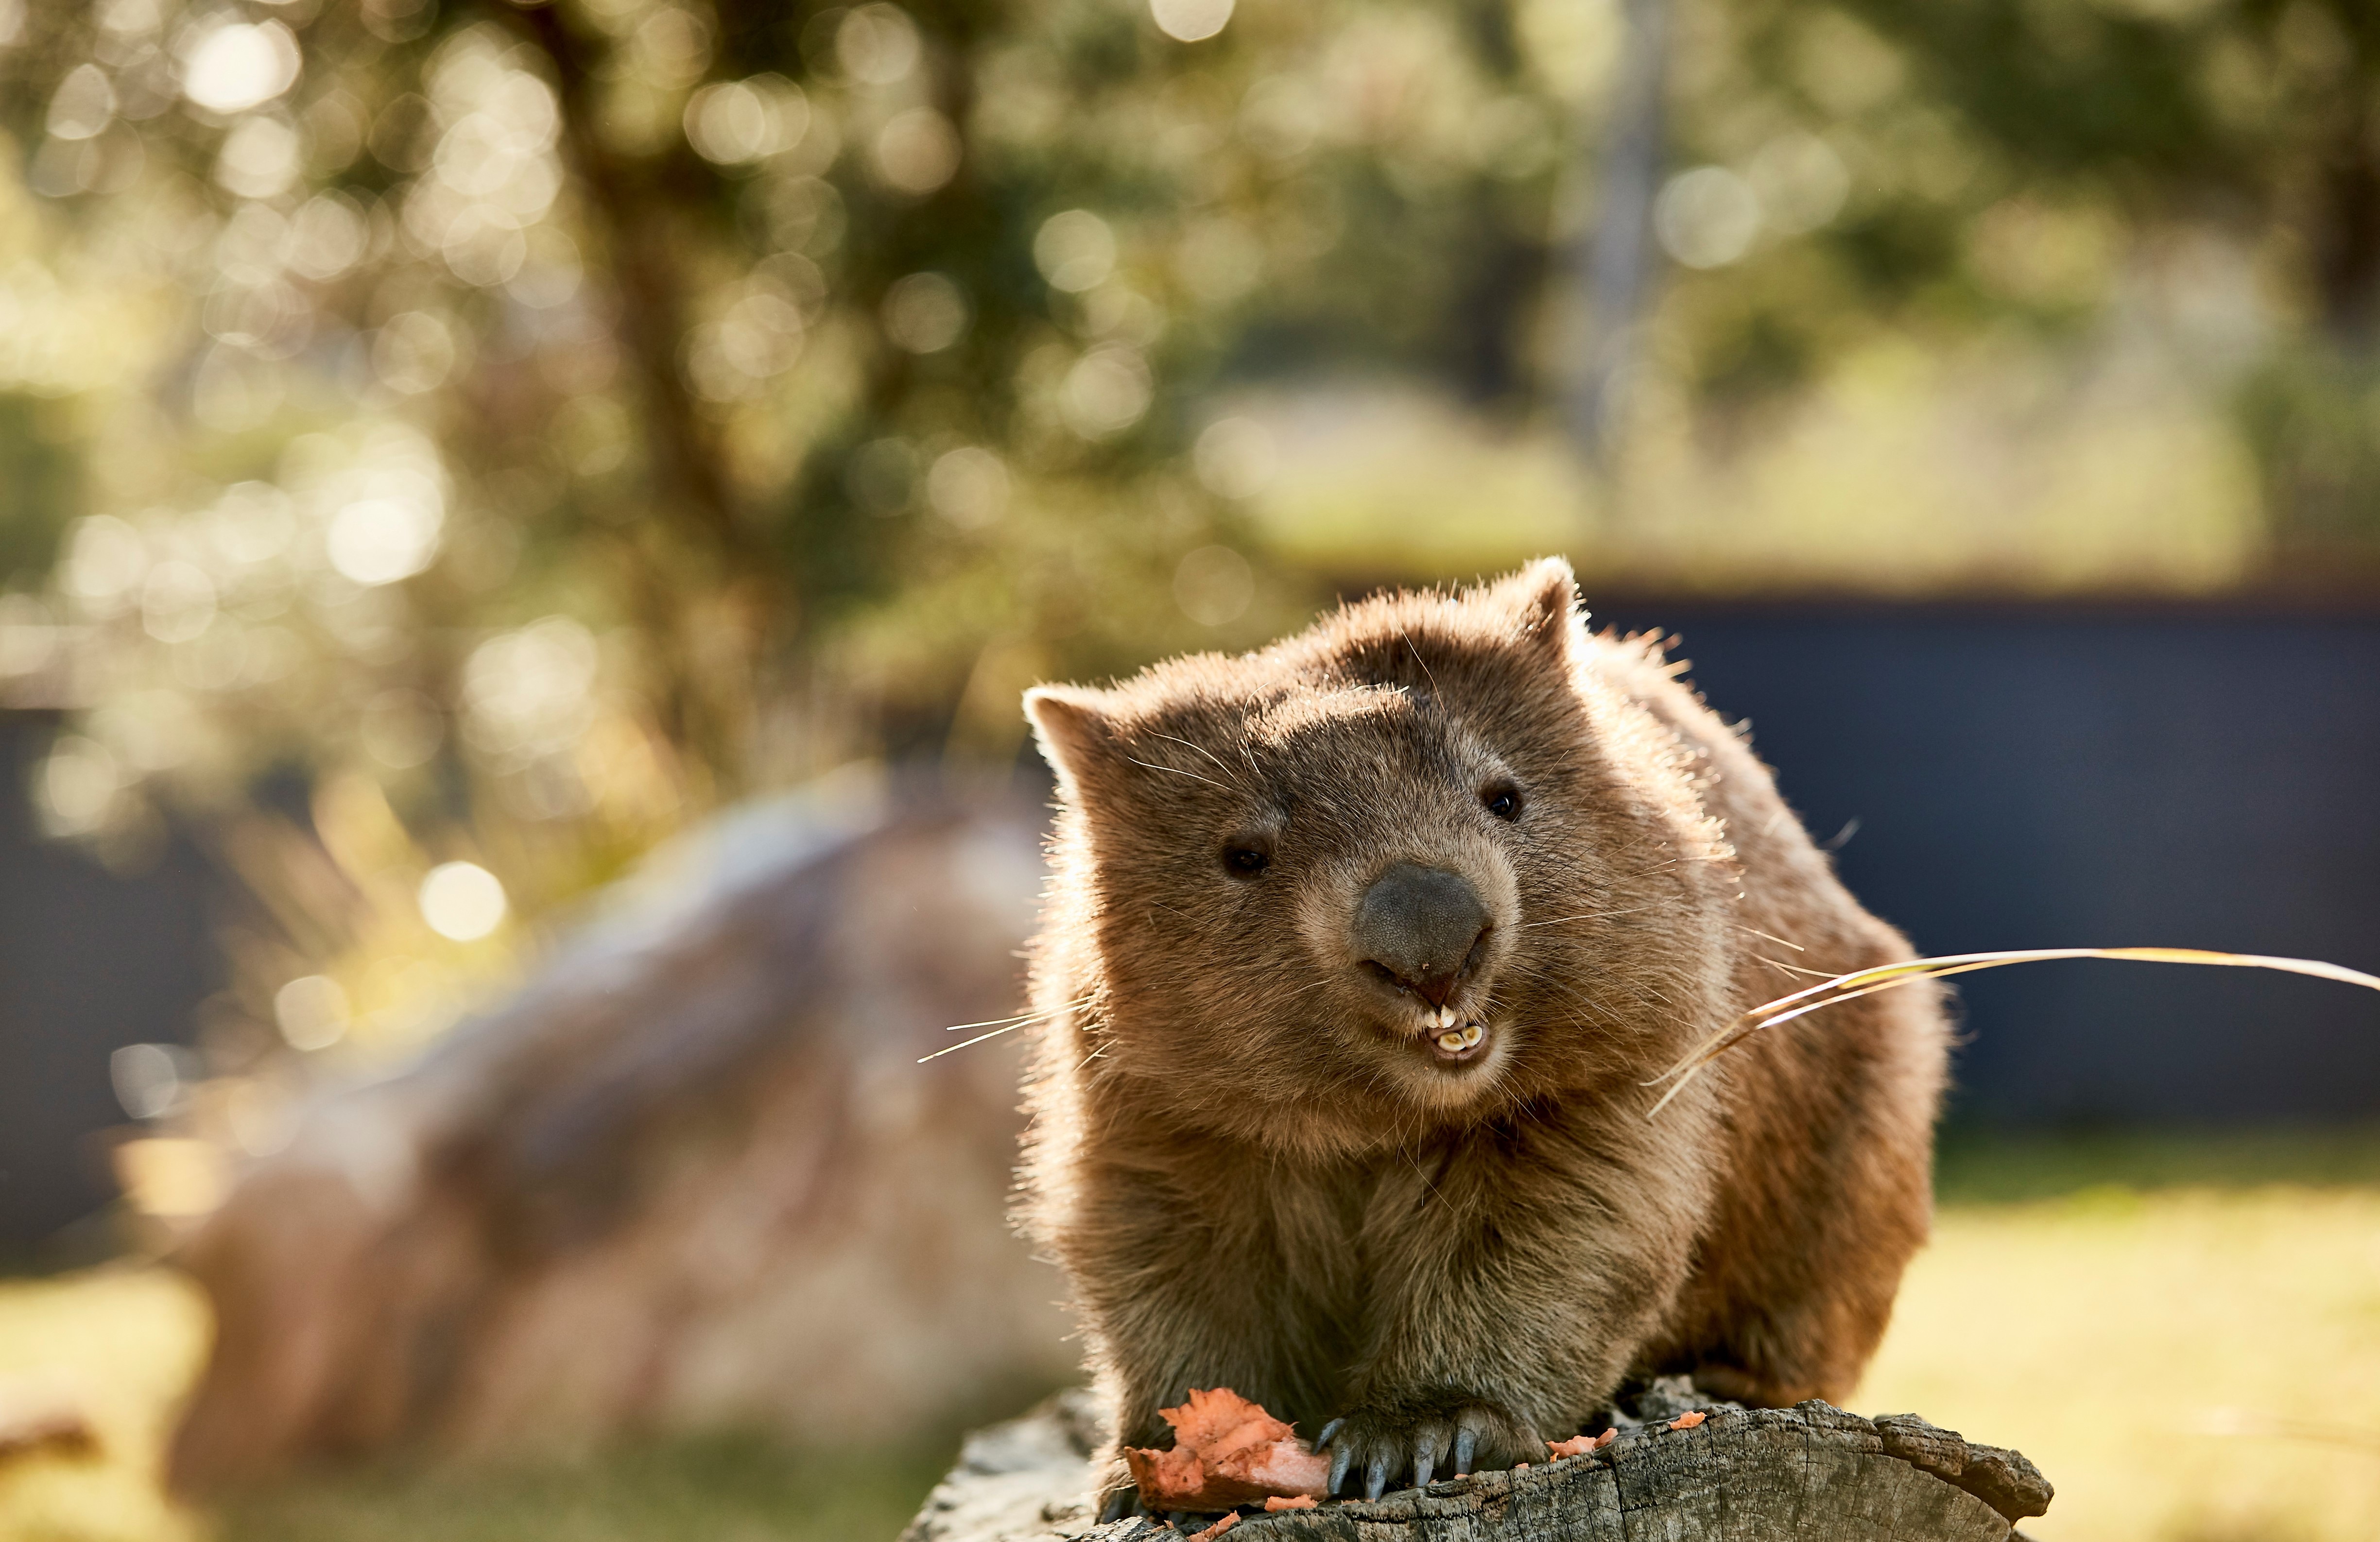 Animal encounters and wildlife experiences - Tourism Australia